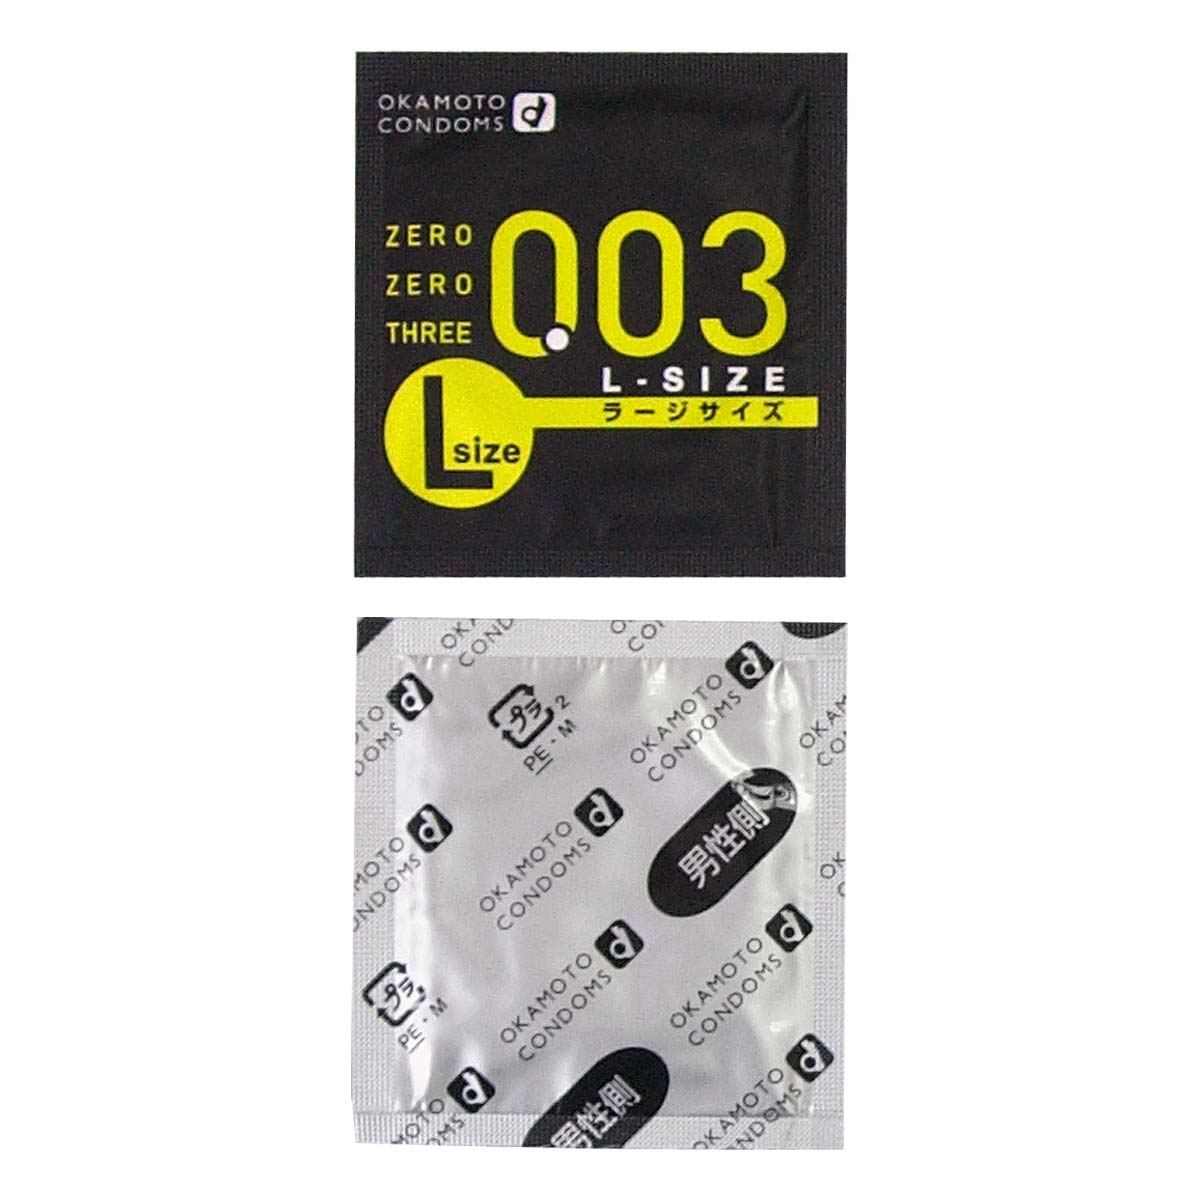 Zero Zero Three 0.03 L-size (Japan Edition) 58mm 2 pieces Latex Condom-thumb_2